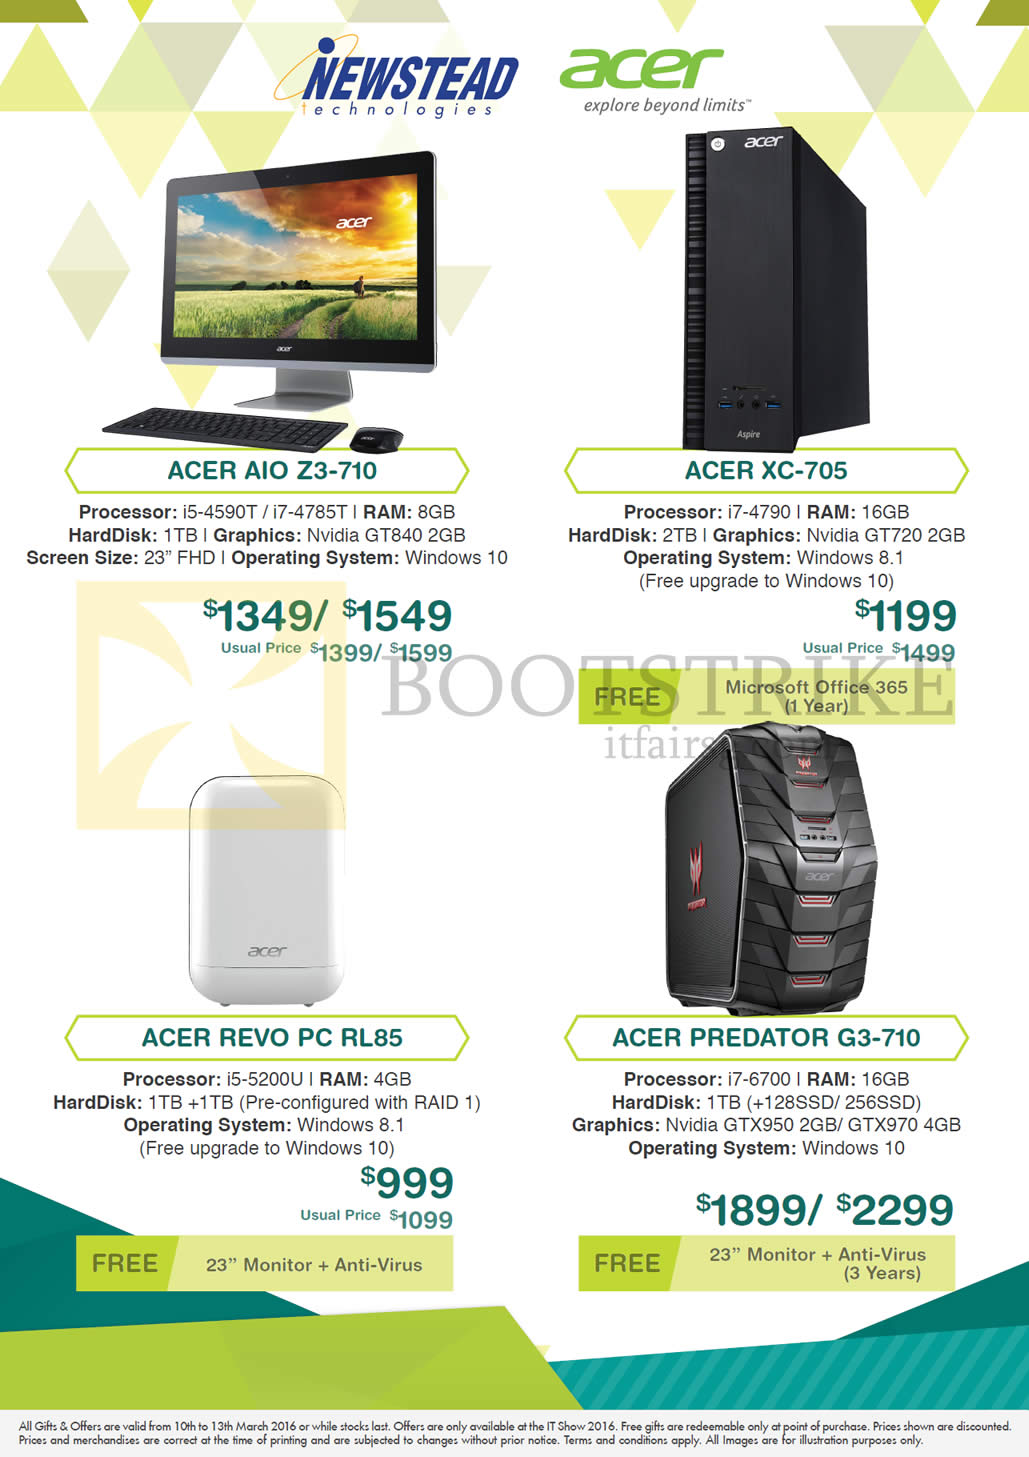 IT SHOW 2016 price list image brochure of Acer Newstead Desktop PCs, AIO Z3-710, XC-705, PREDATOR G3-710, REVO PC RL85